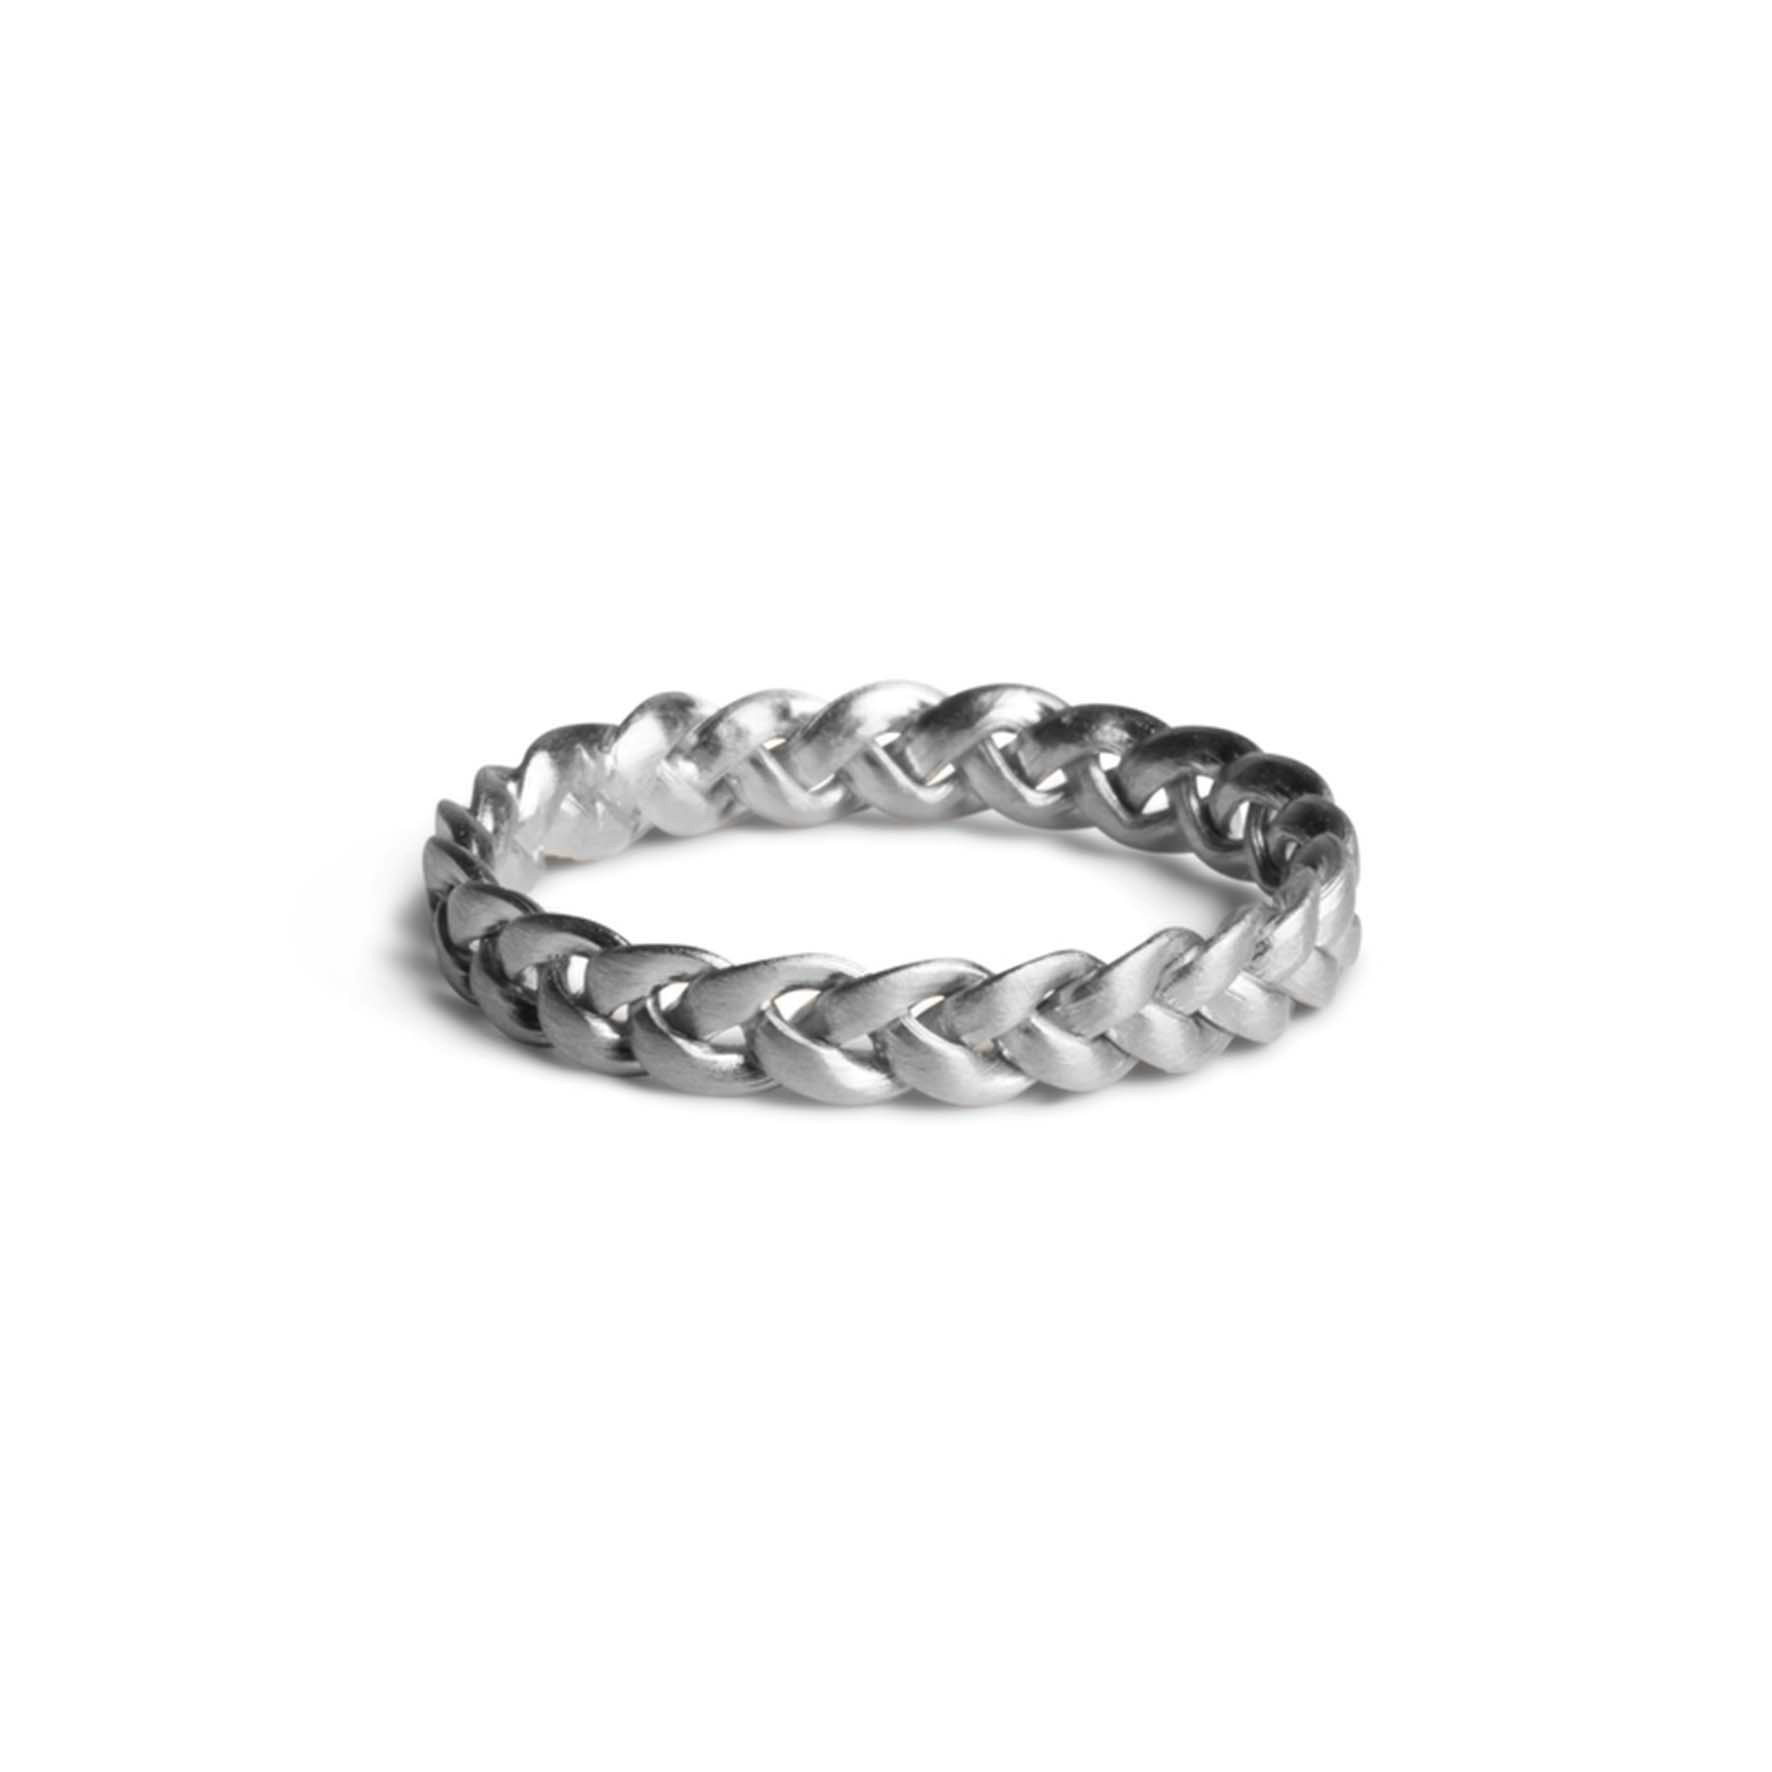 Medium Braided Ring from Jane Kønig in Silver Sterling 925